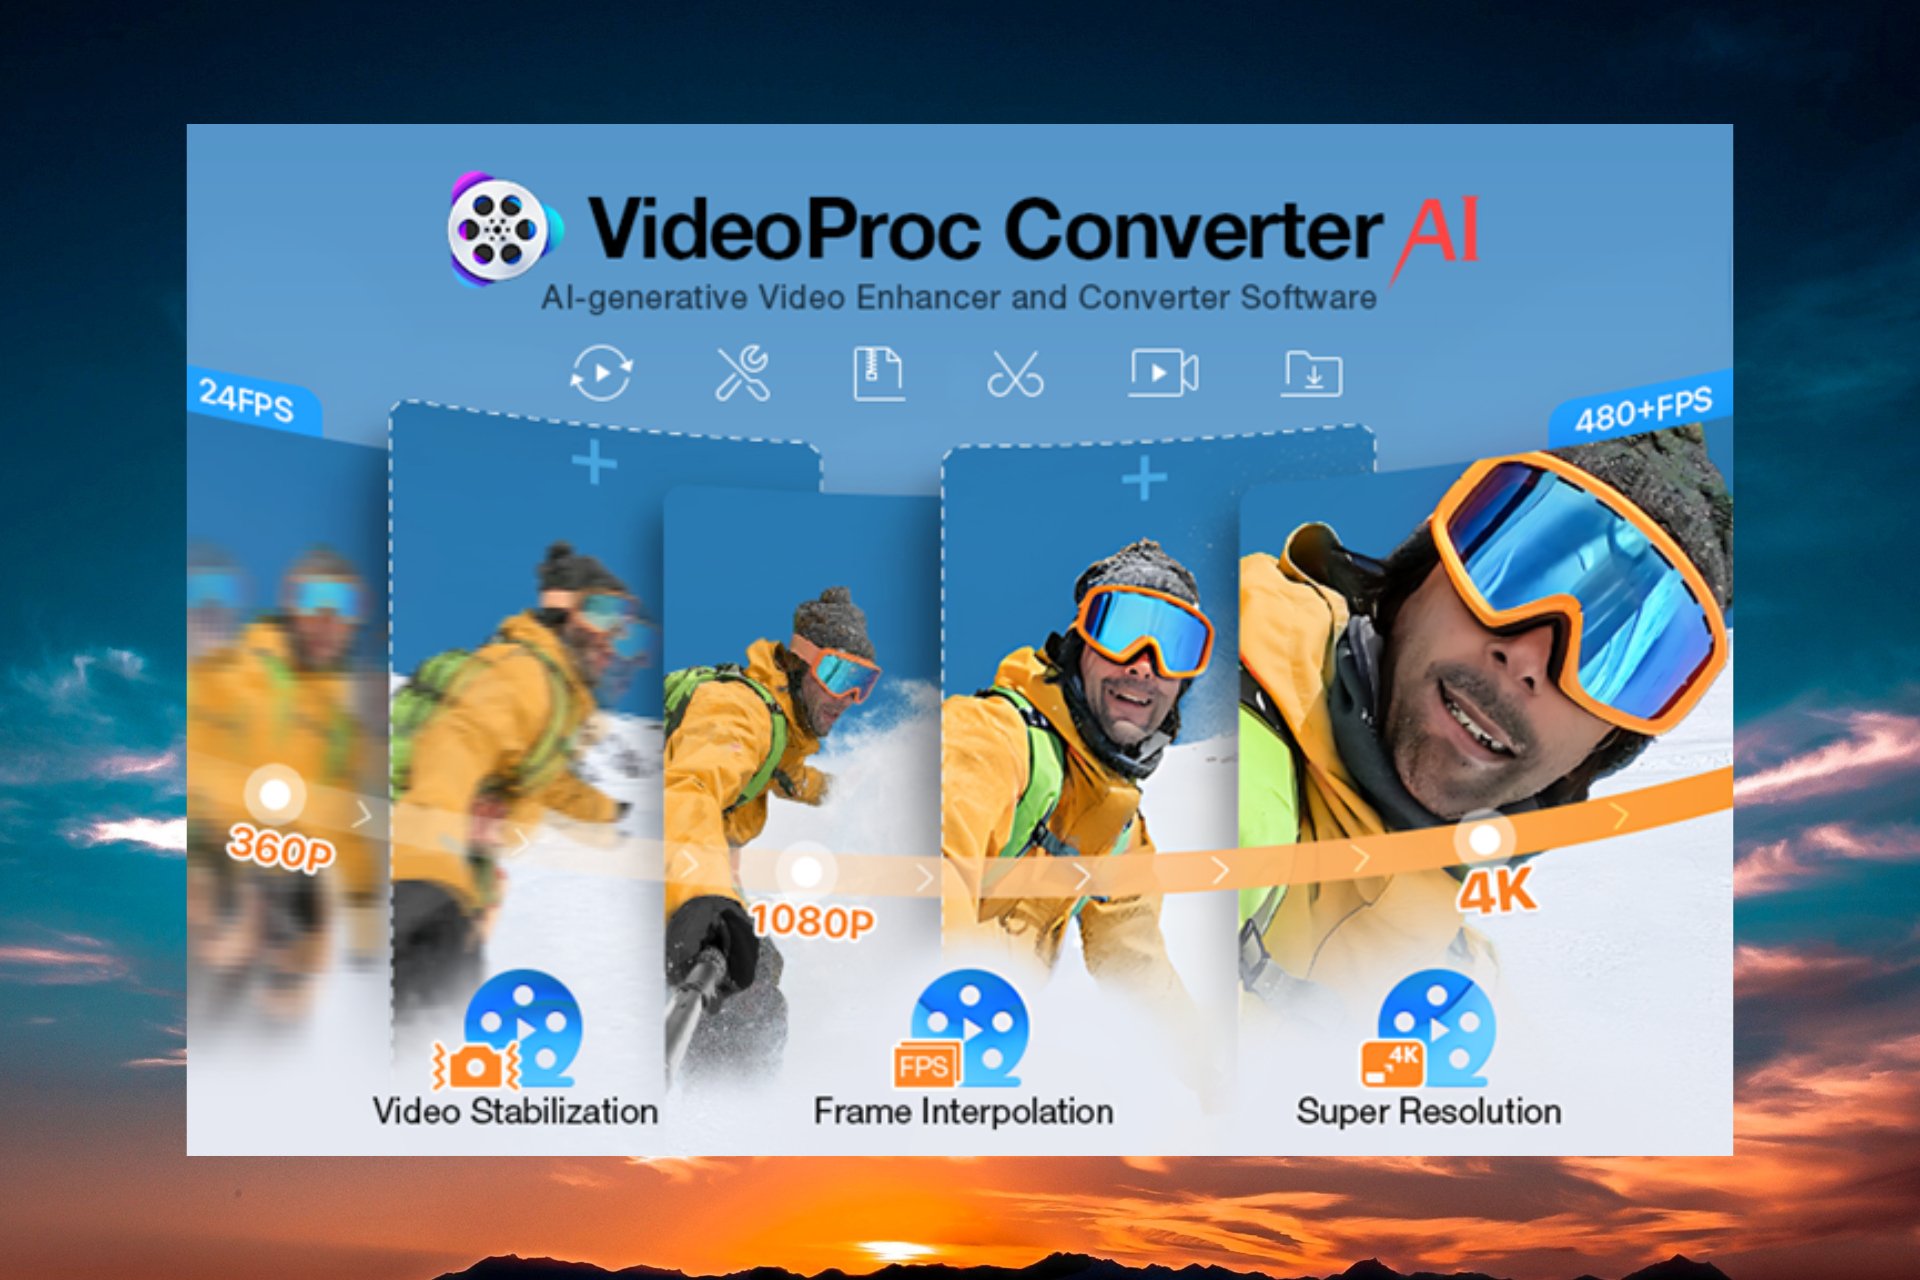 VideoProc Converter AI – Using AI to Enhance Video Quality